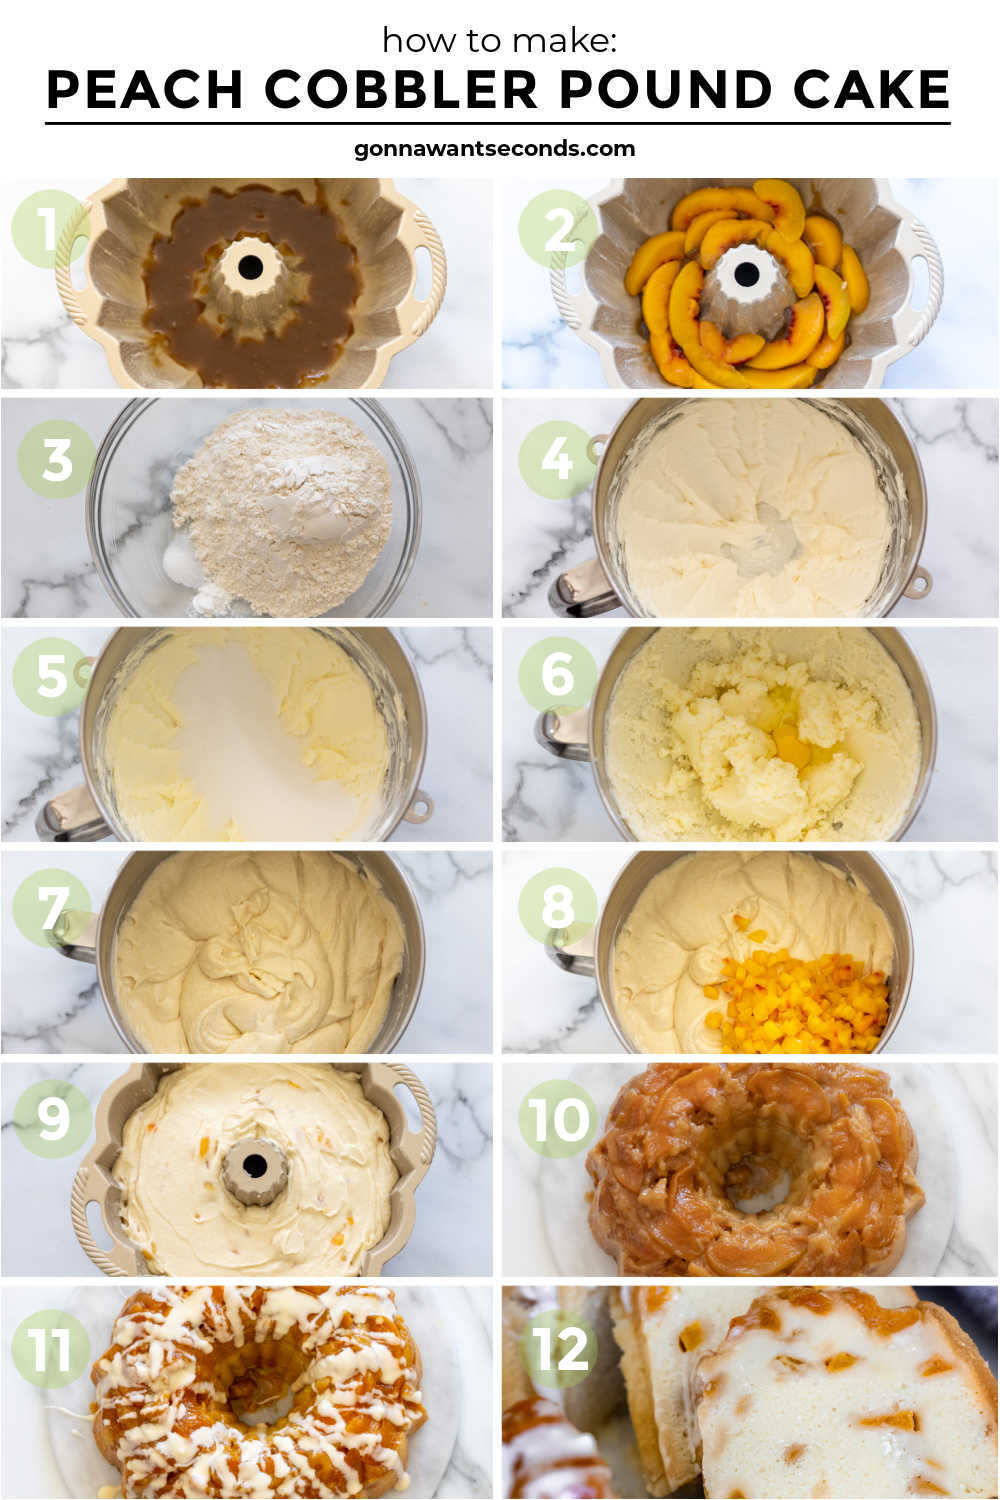 Step by step how to make peach cobbler pound cake